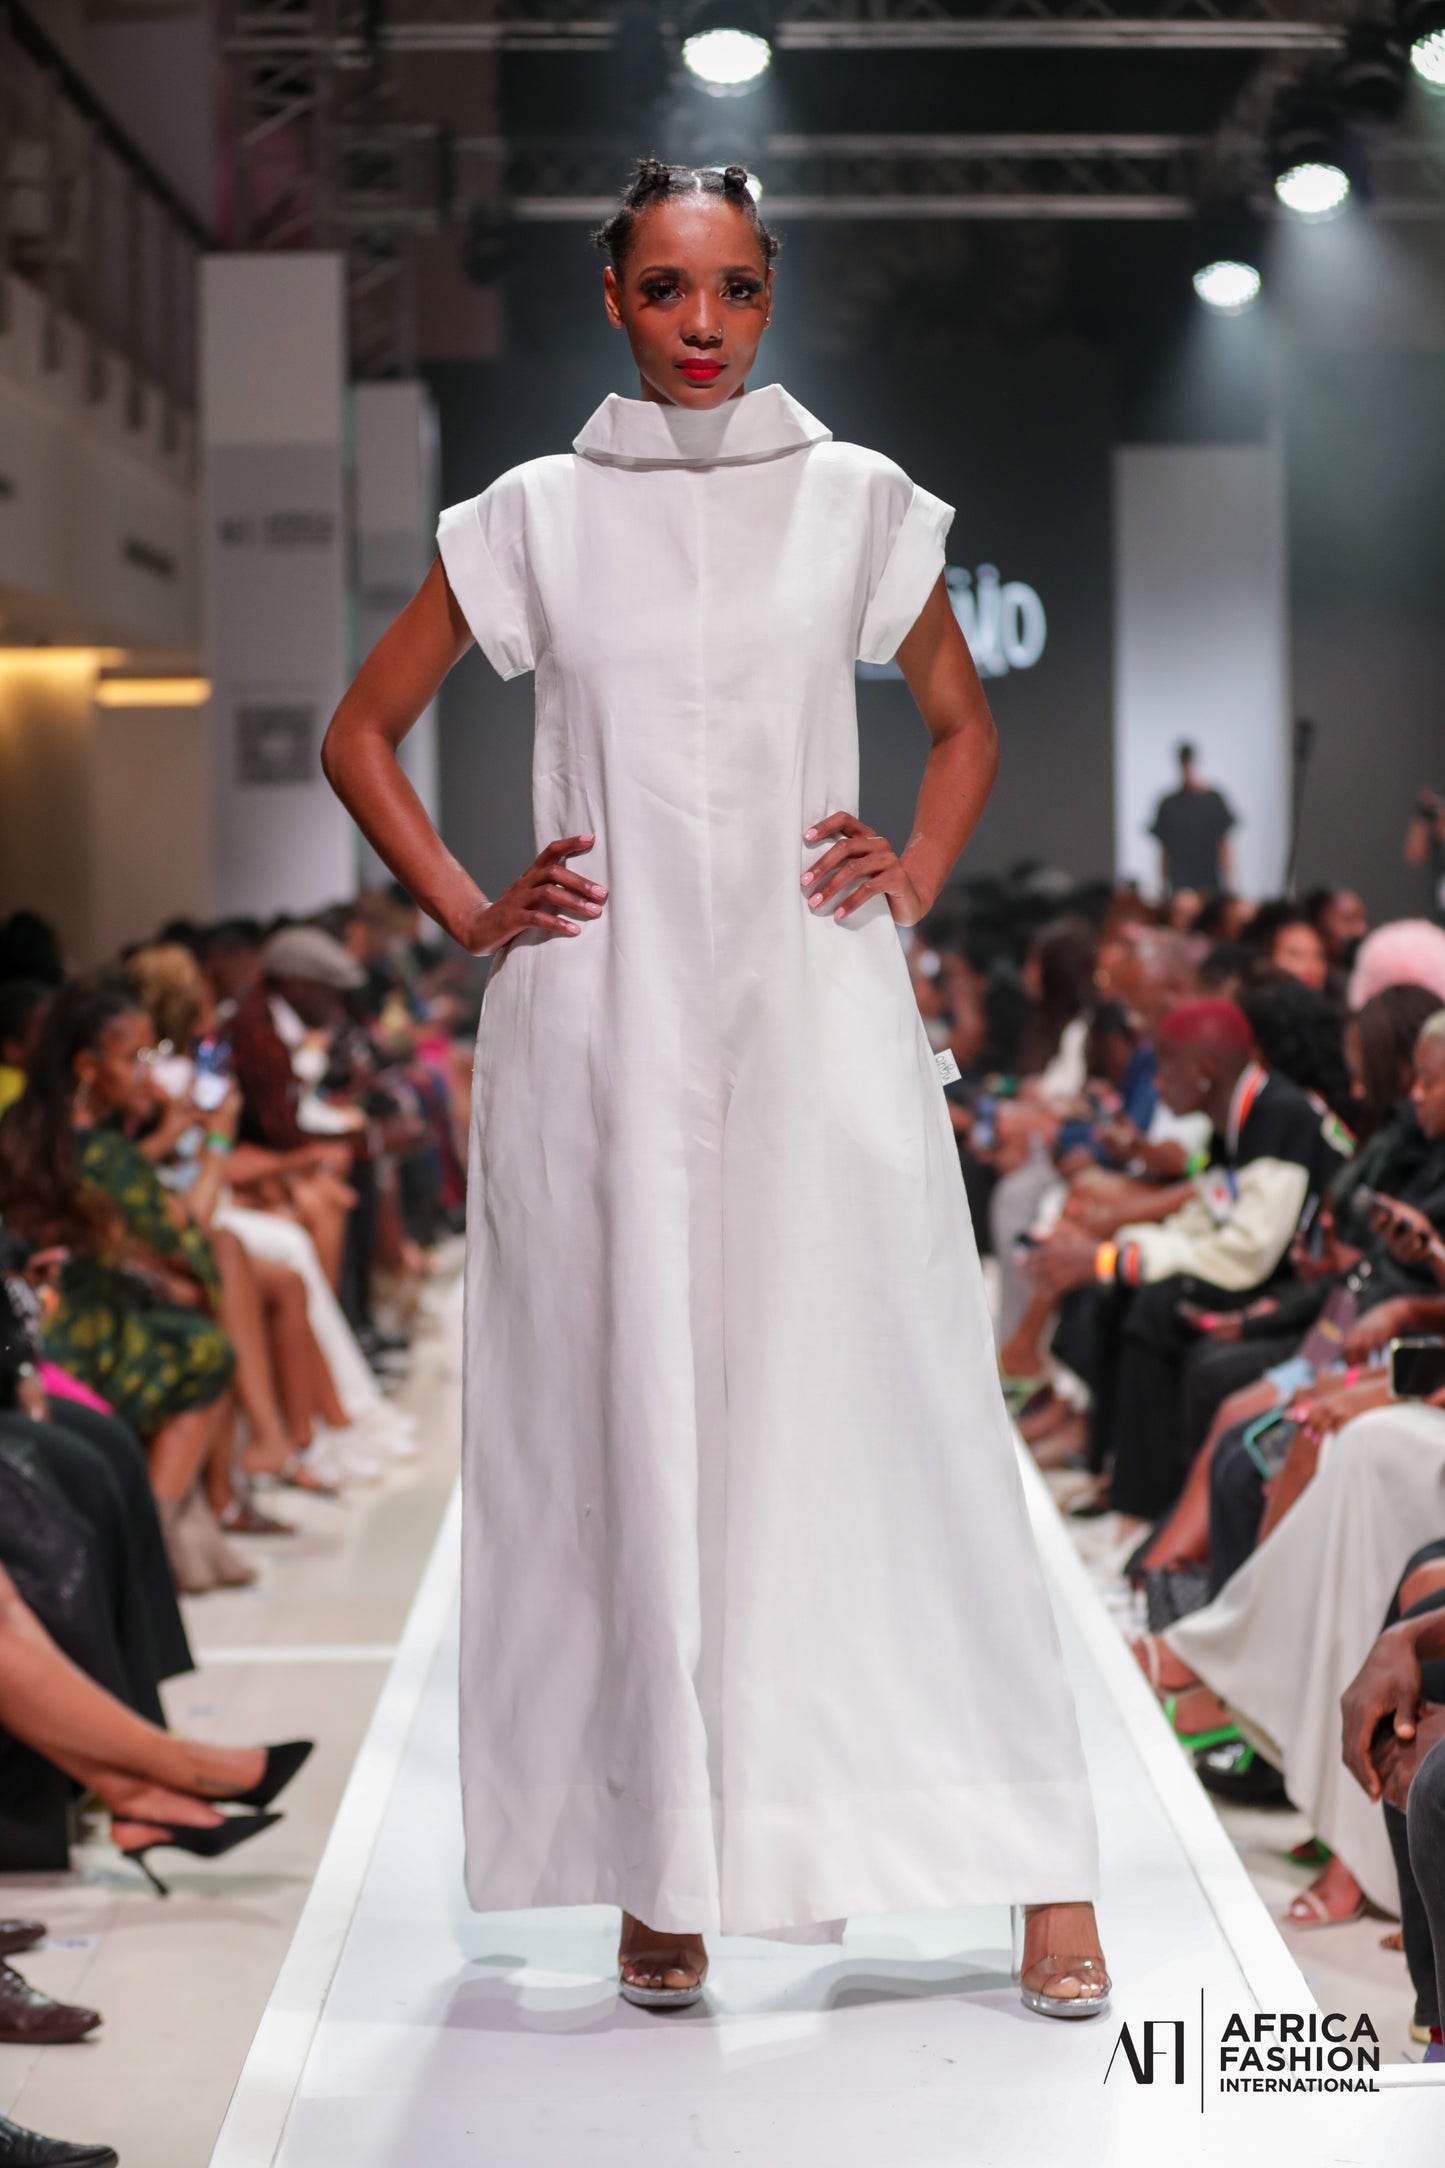 Kubwa maxi dress collared (white)